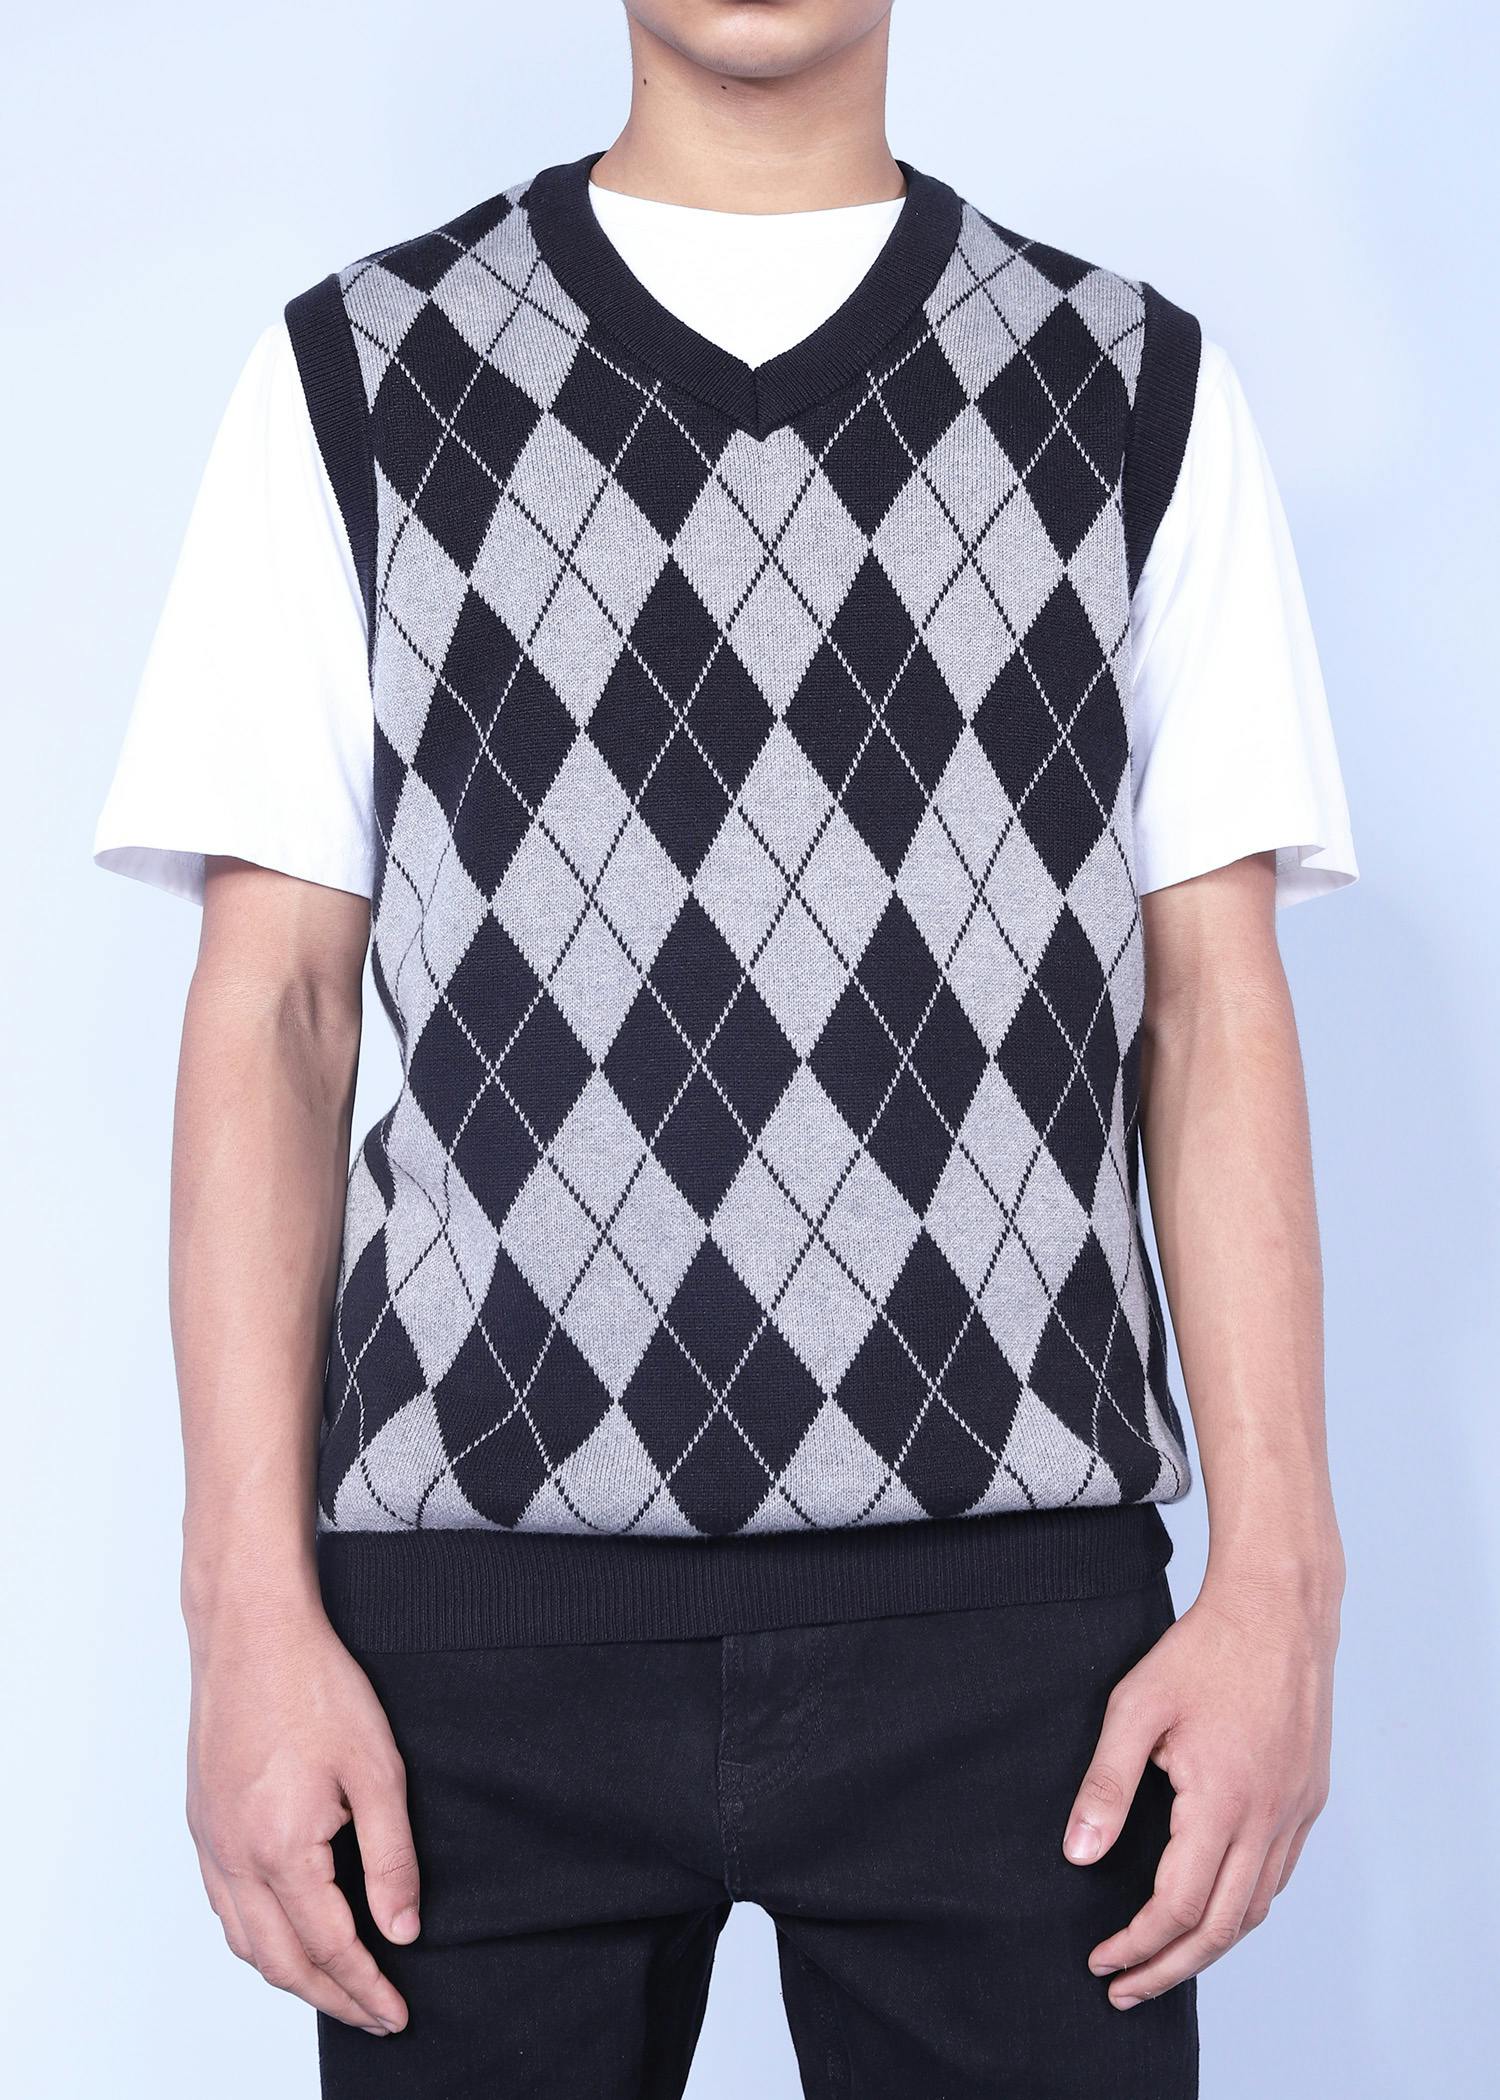 mardin vest sweater black grey color half front view